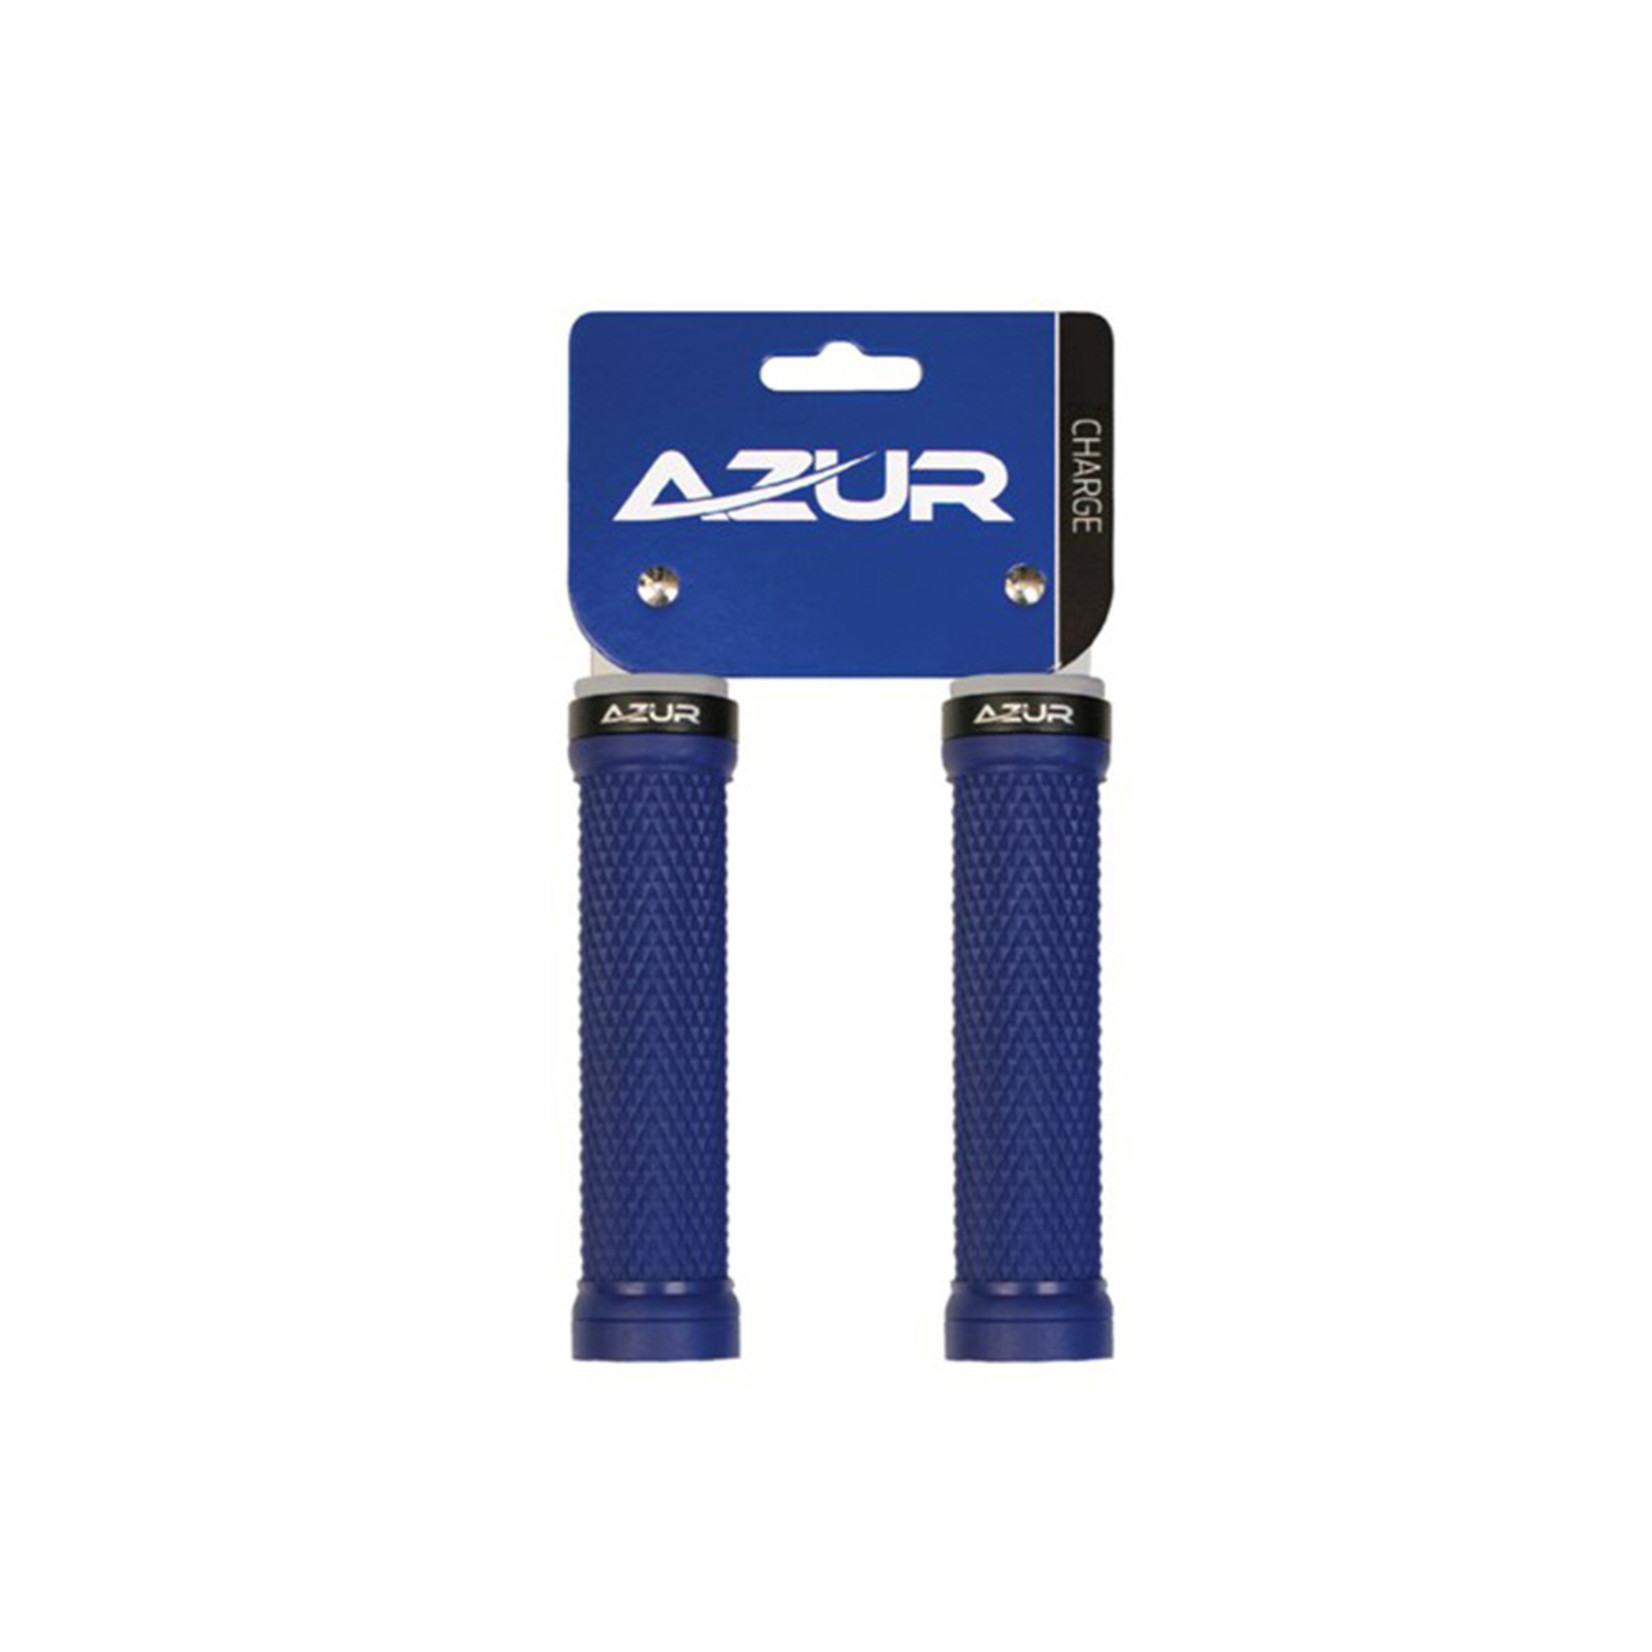 Azur Azur Bike/Cycling Handlebar Grip - Charge 130mm - Blue/Black